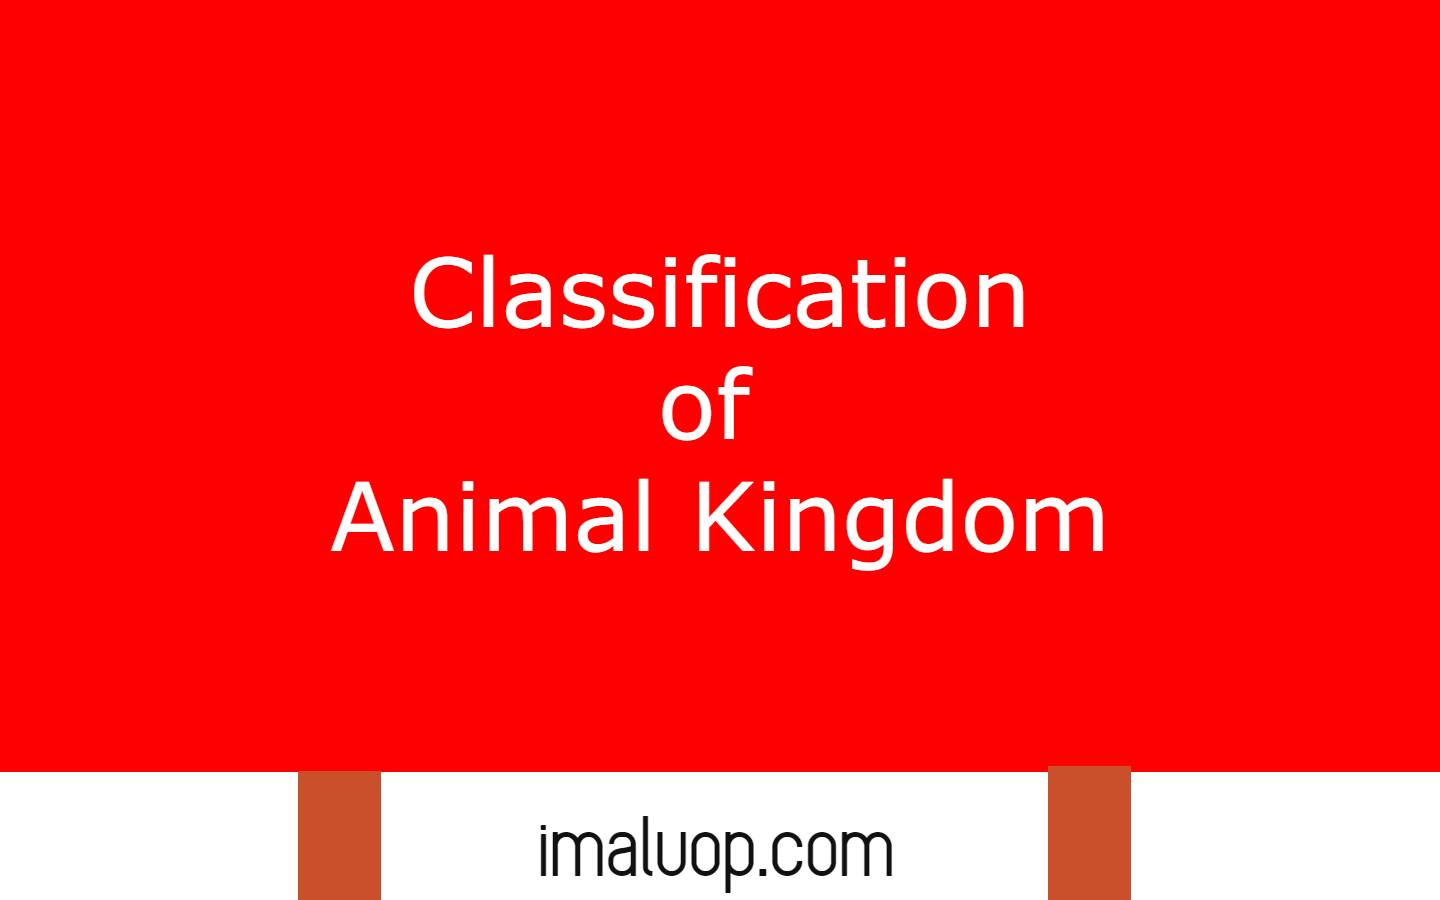 Classification of Animal Kingdom